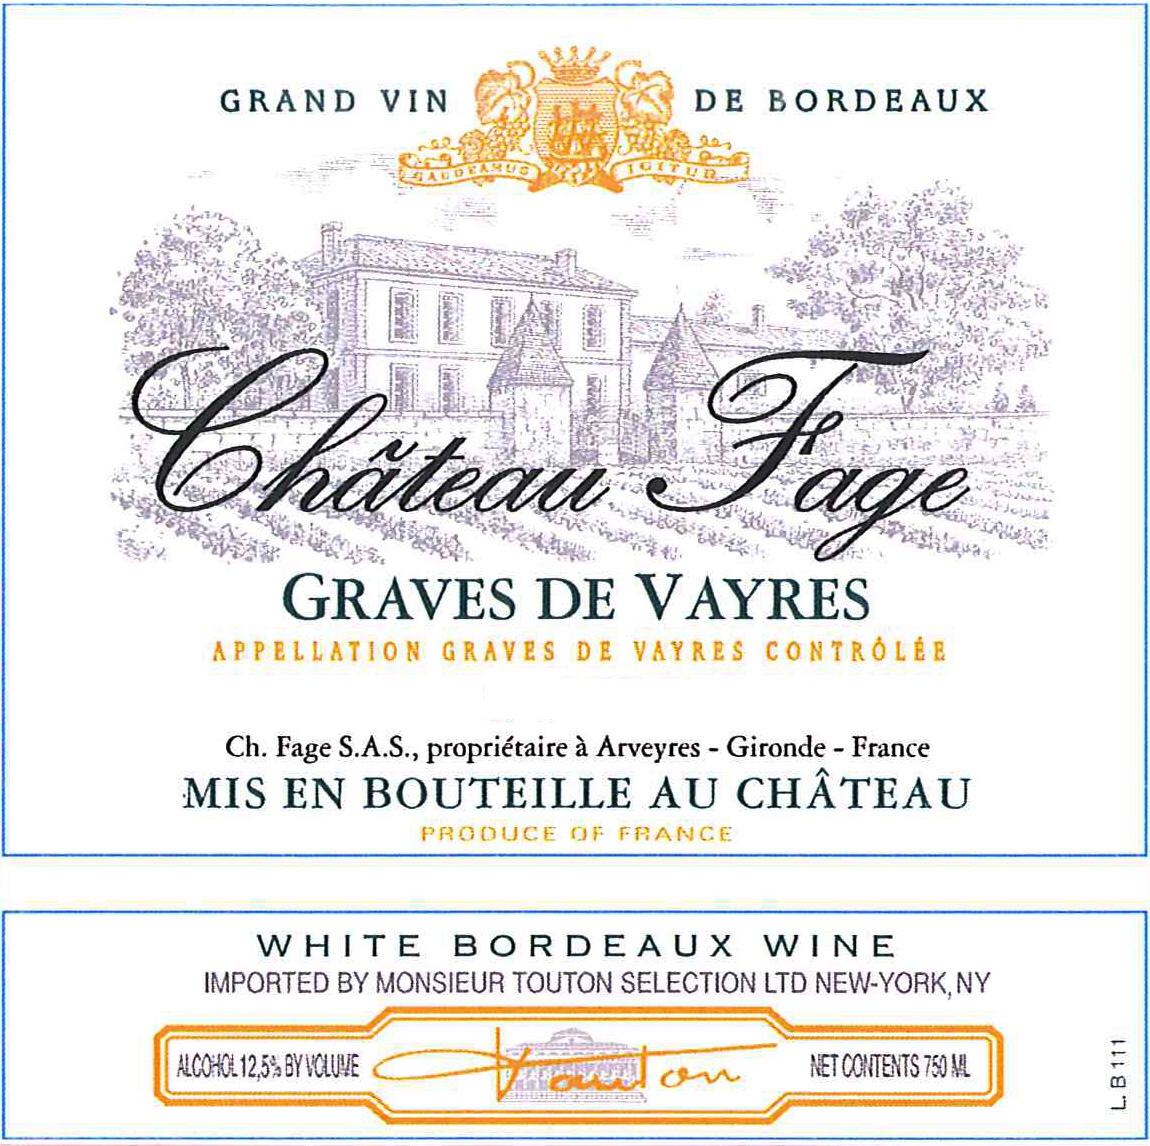 Chateau Fage - White label